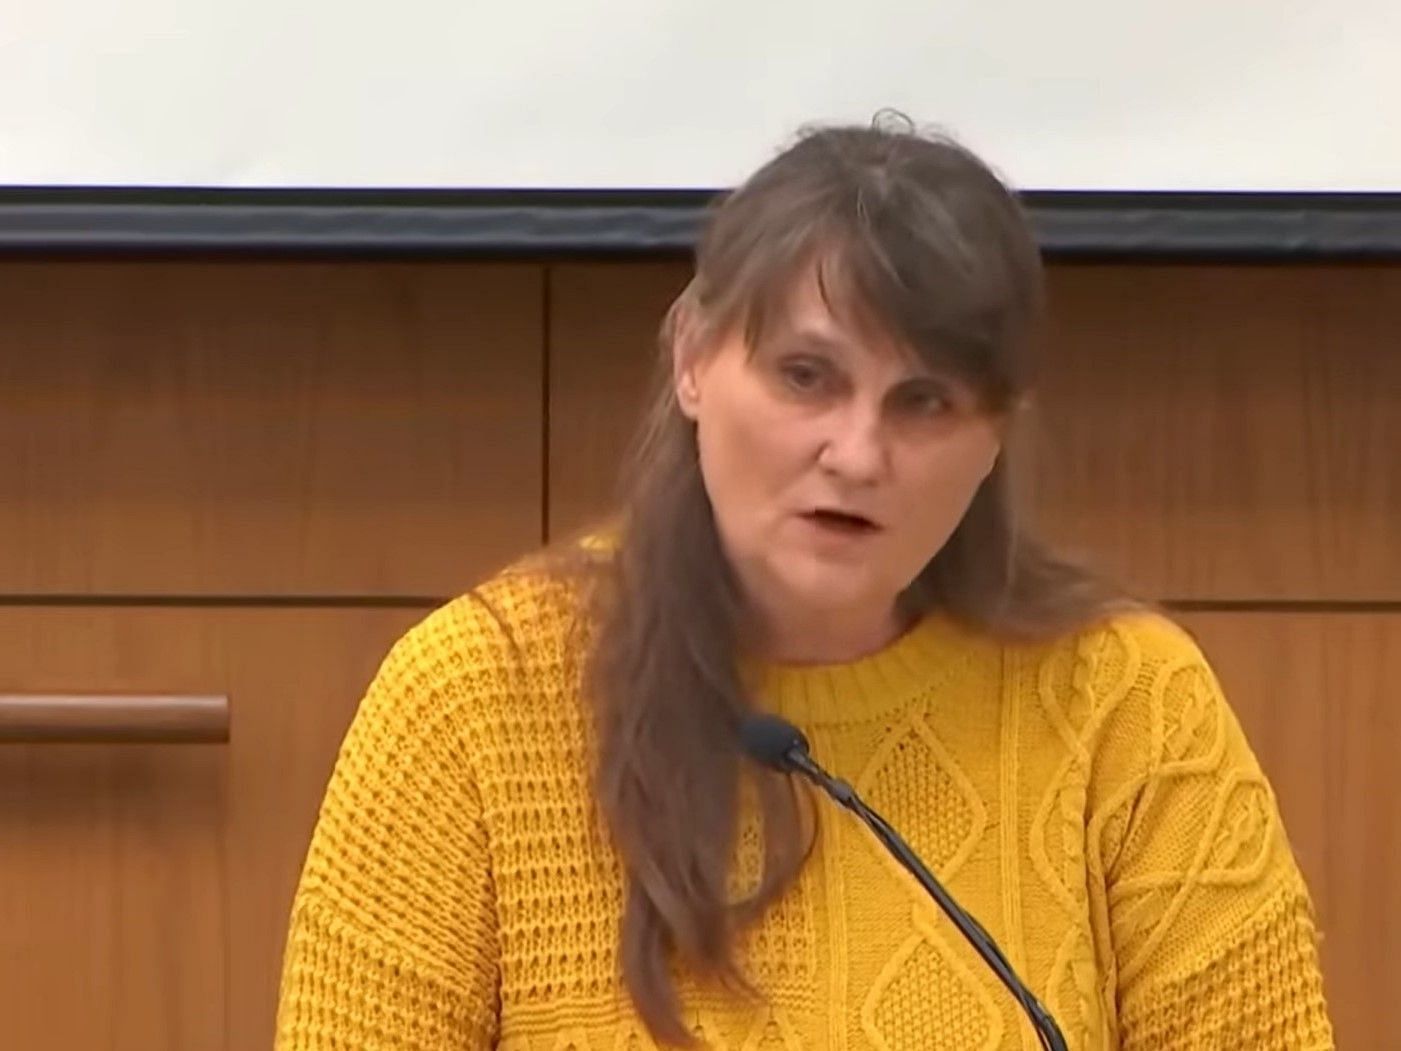 Jennifer providing her testimony during the trial (image via YouTube)